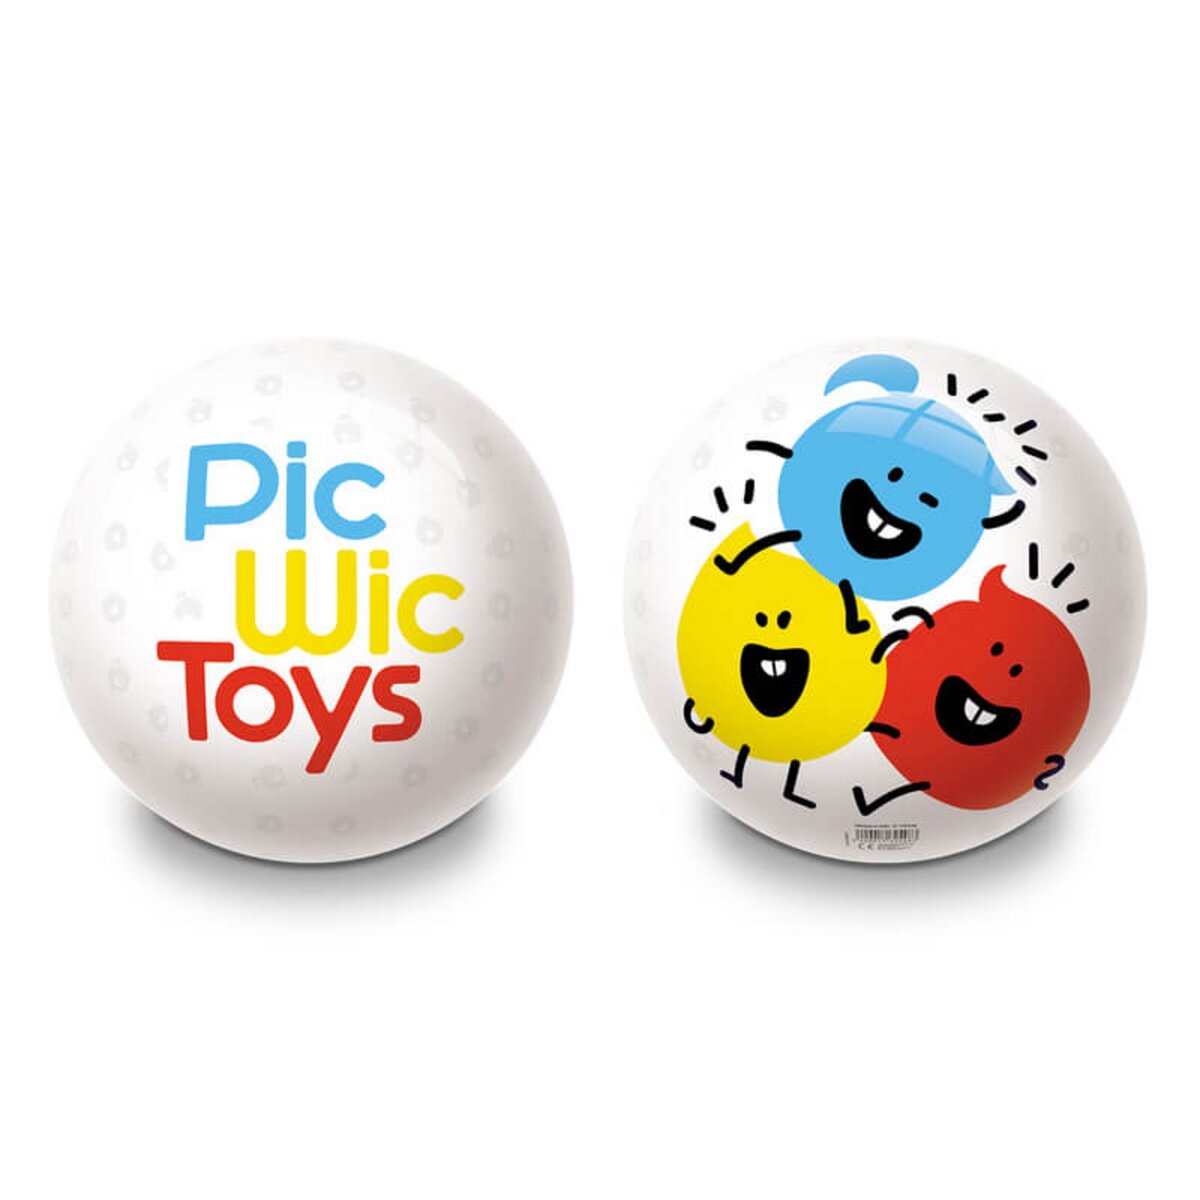 PICWICTOYS Ballon PicWicToys - Toys blanc